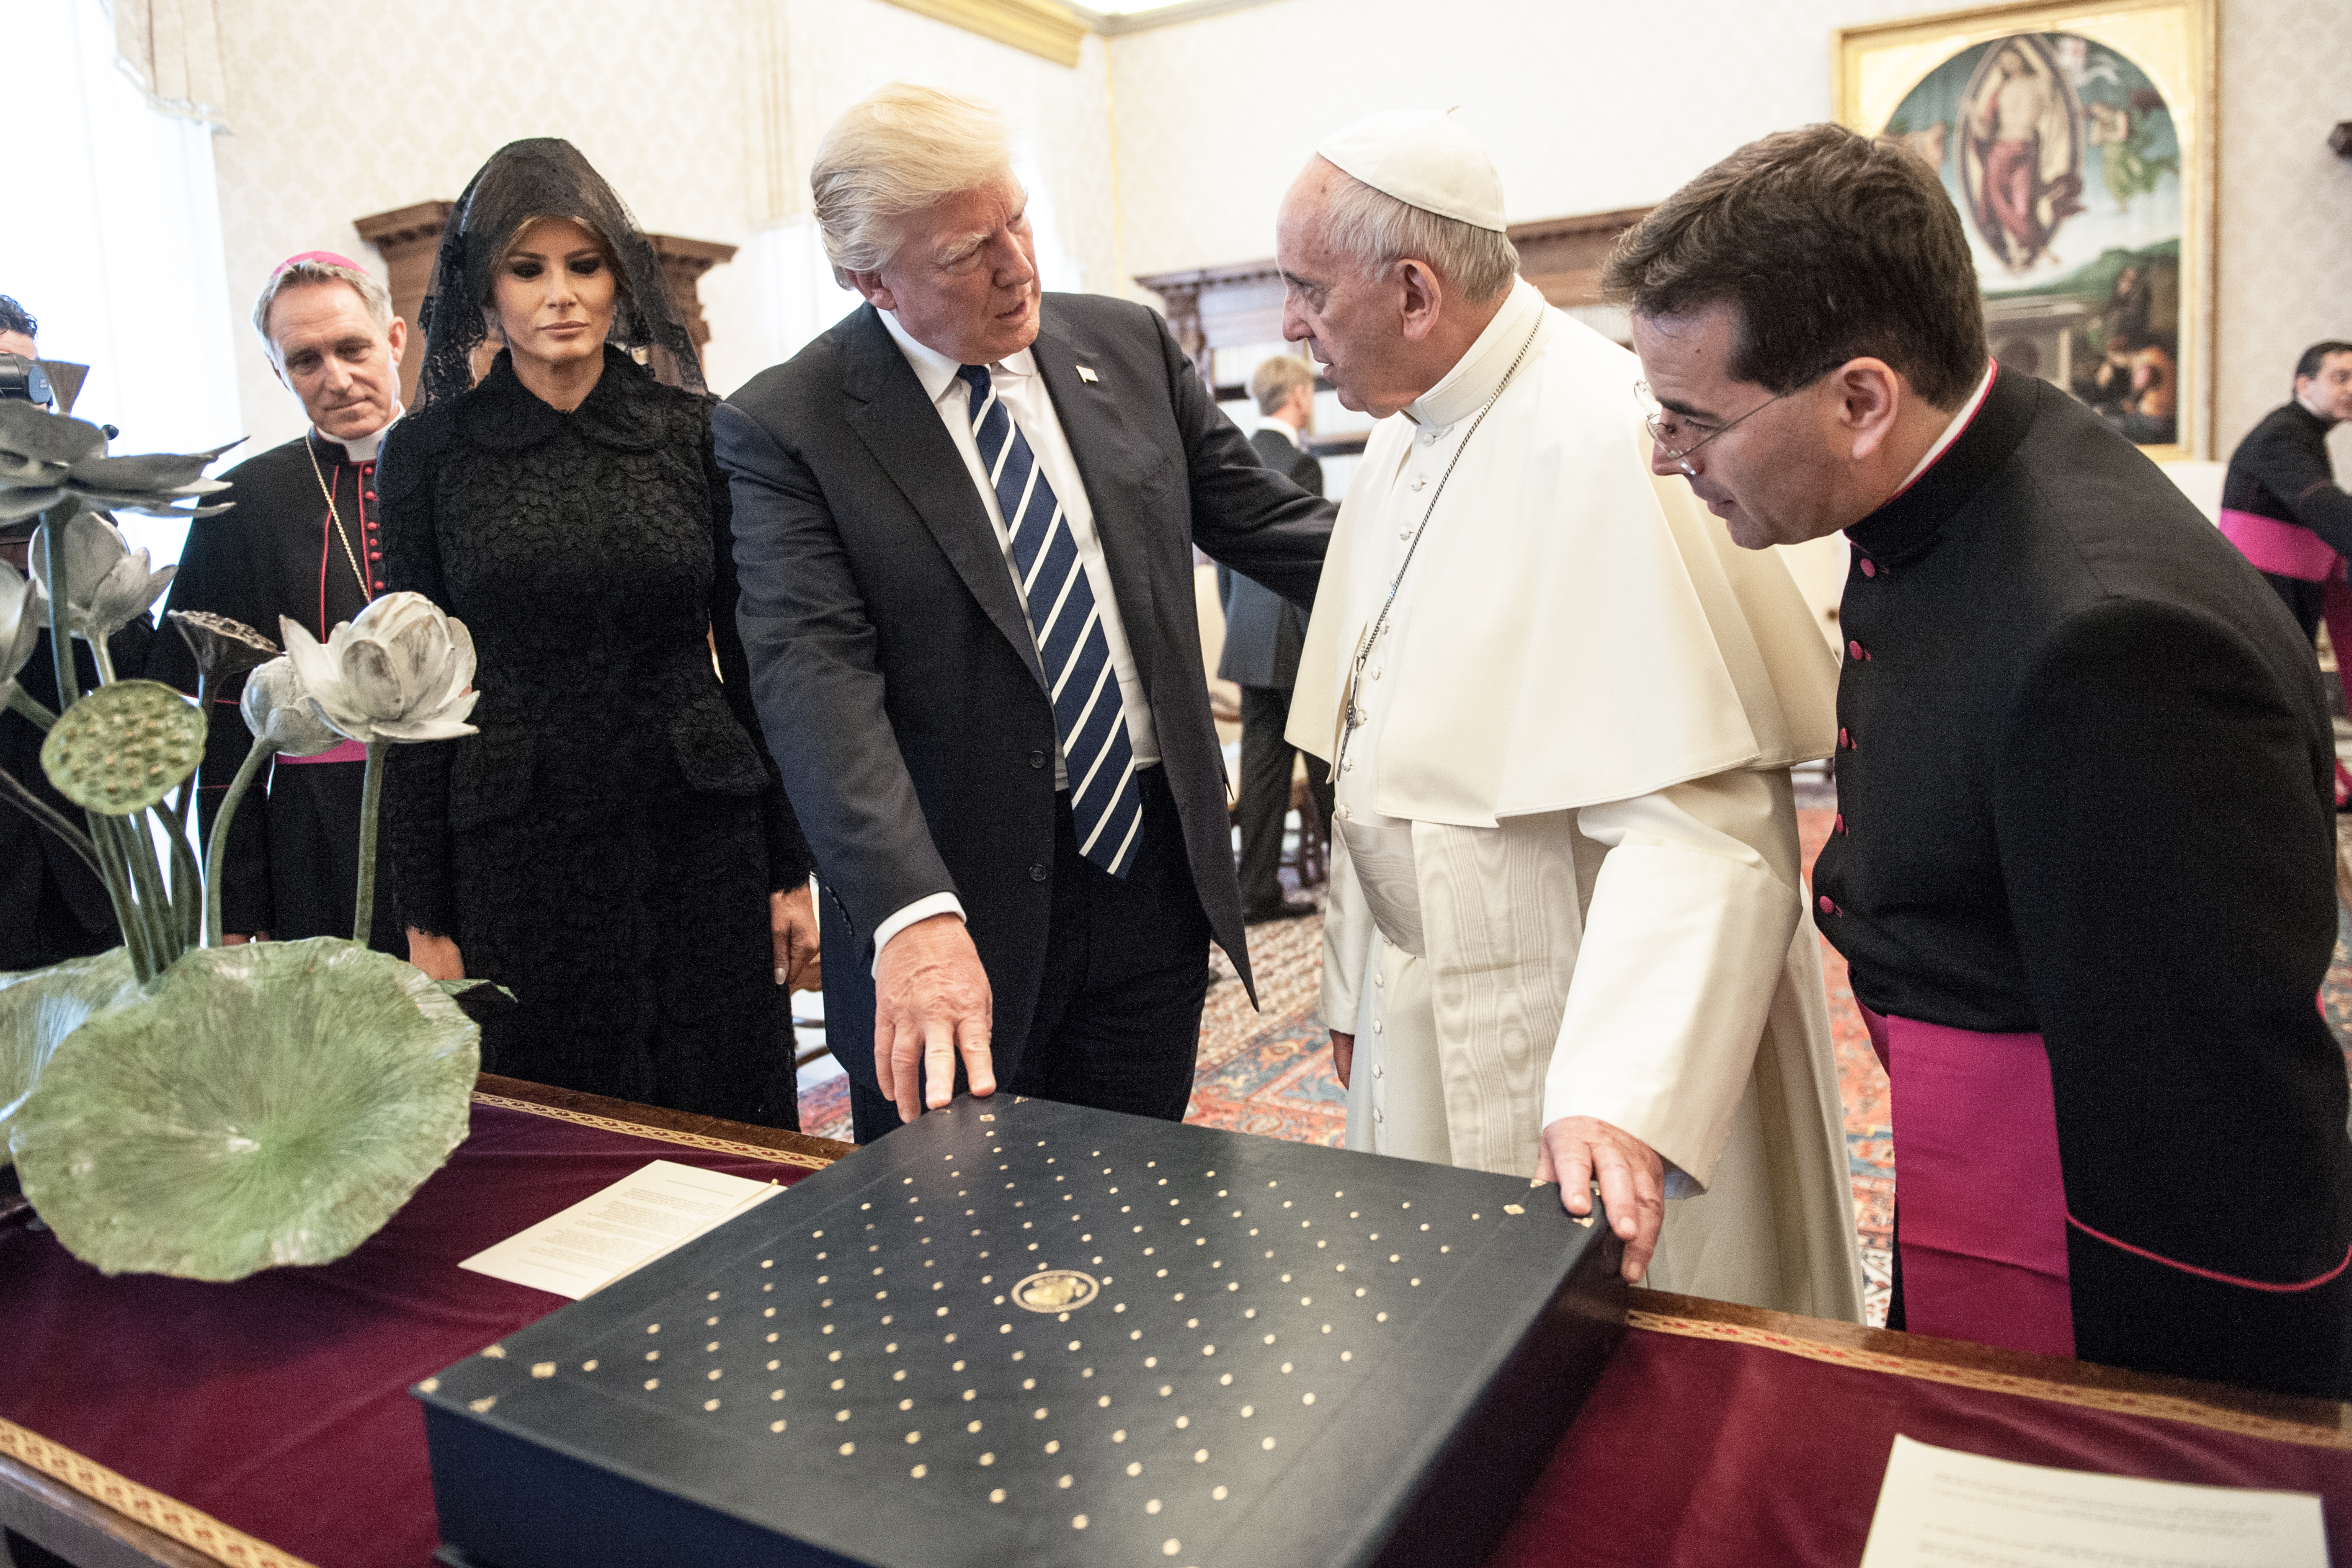 Pope Francis Meets USA President Donald Trump